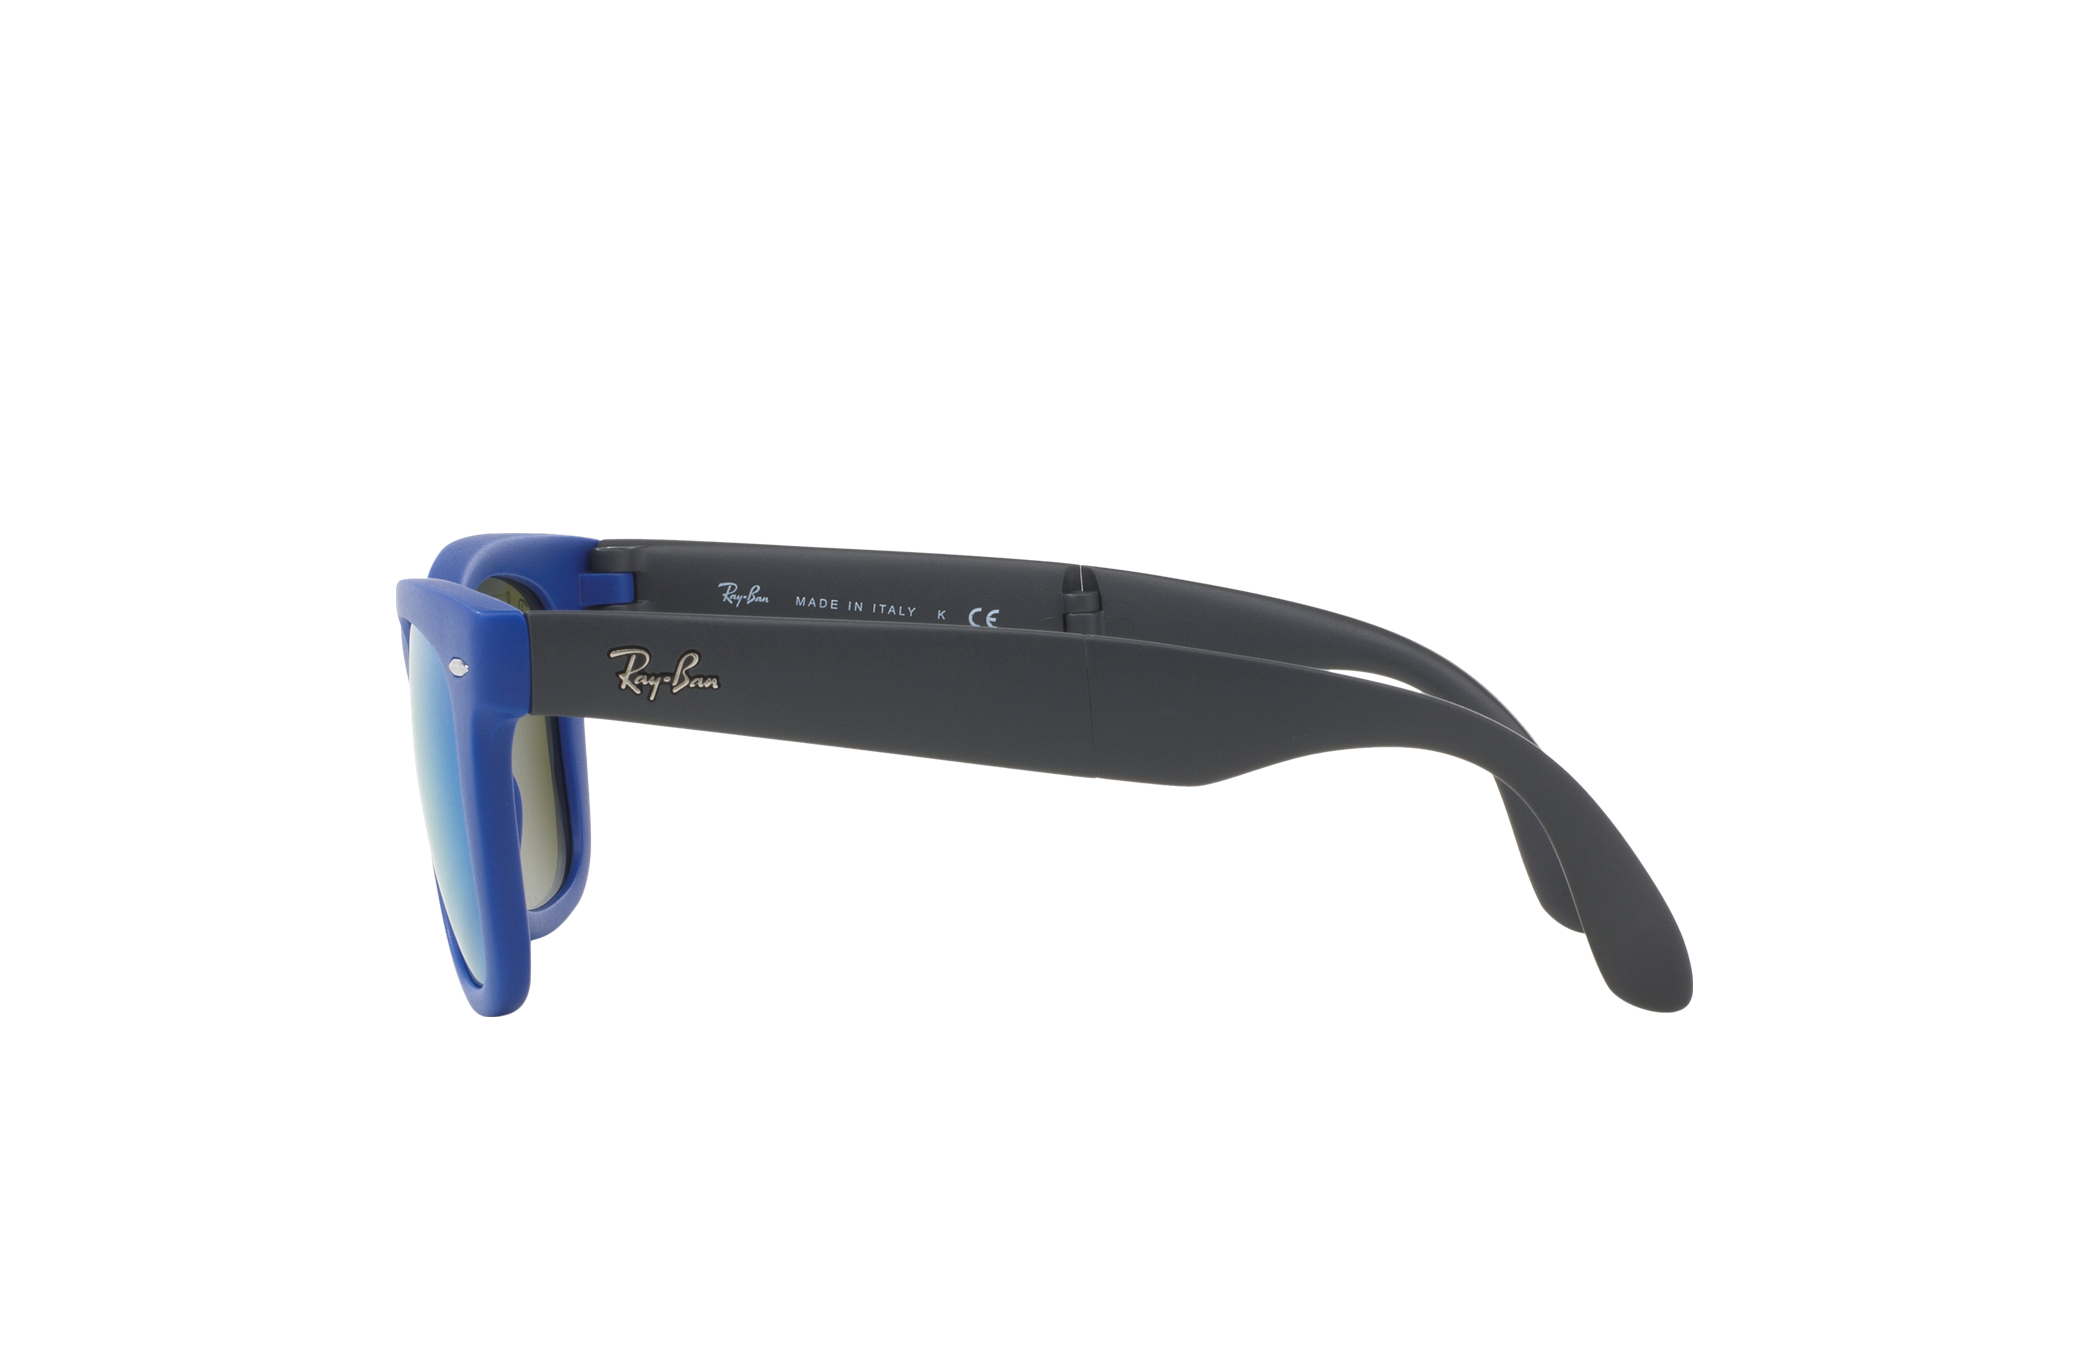 ray ban sunglasses wayfarer folding price